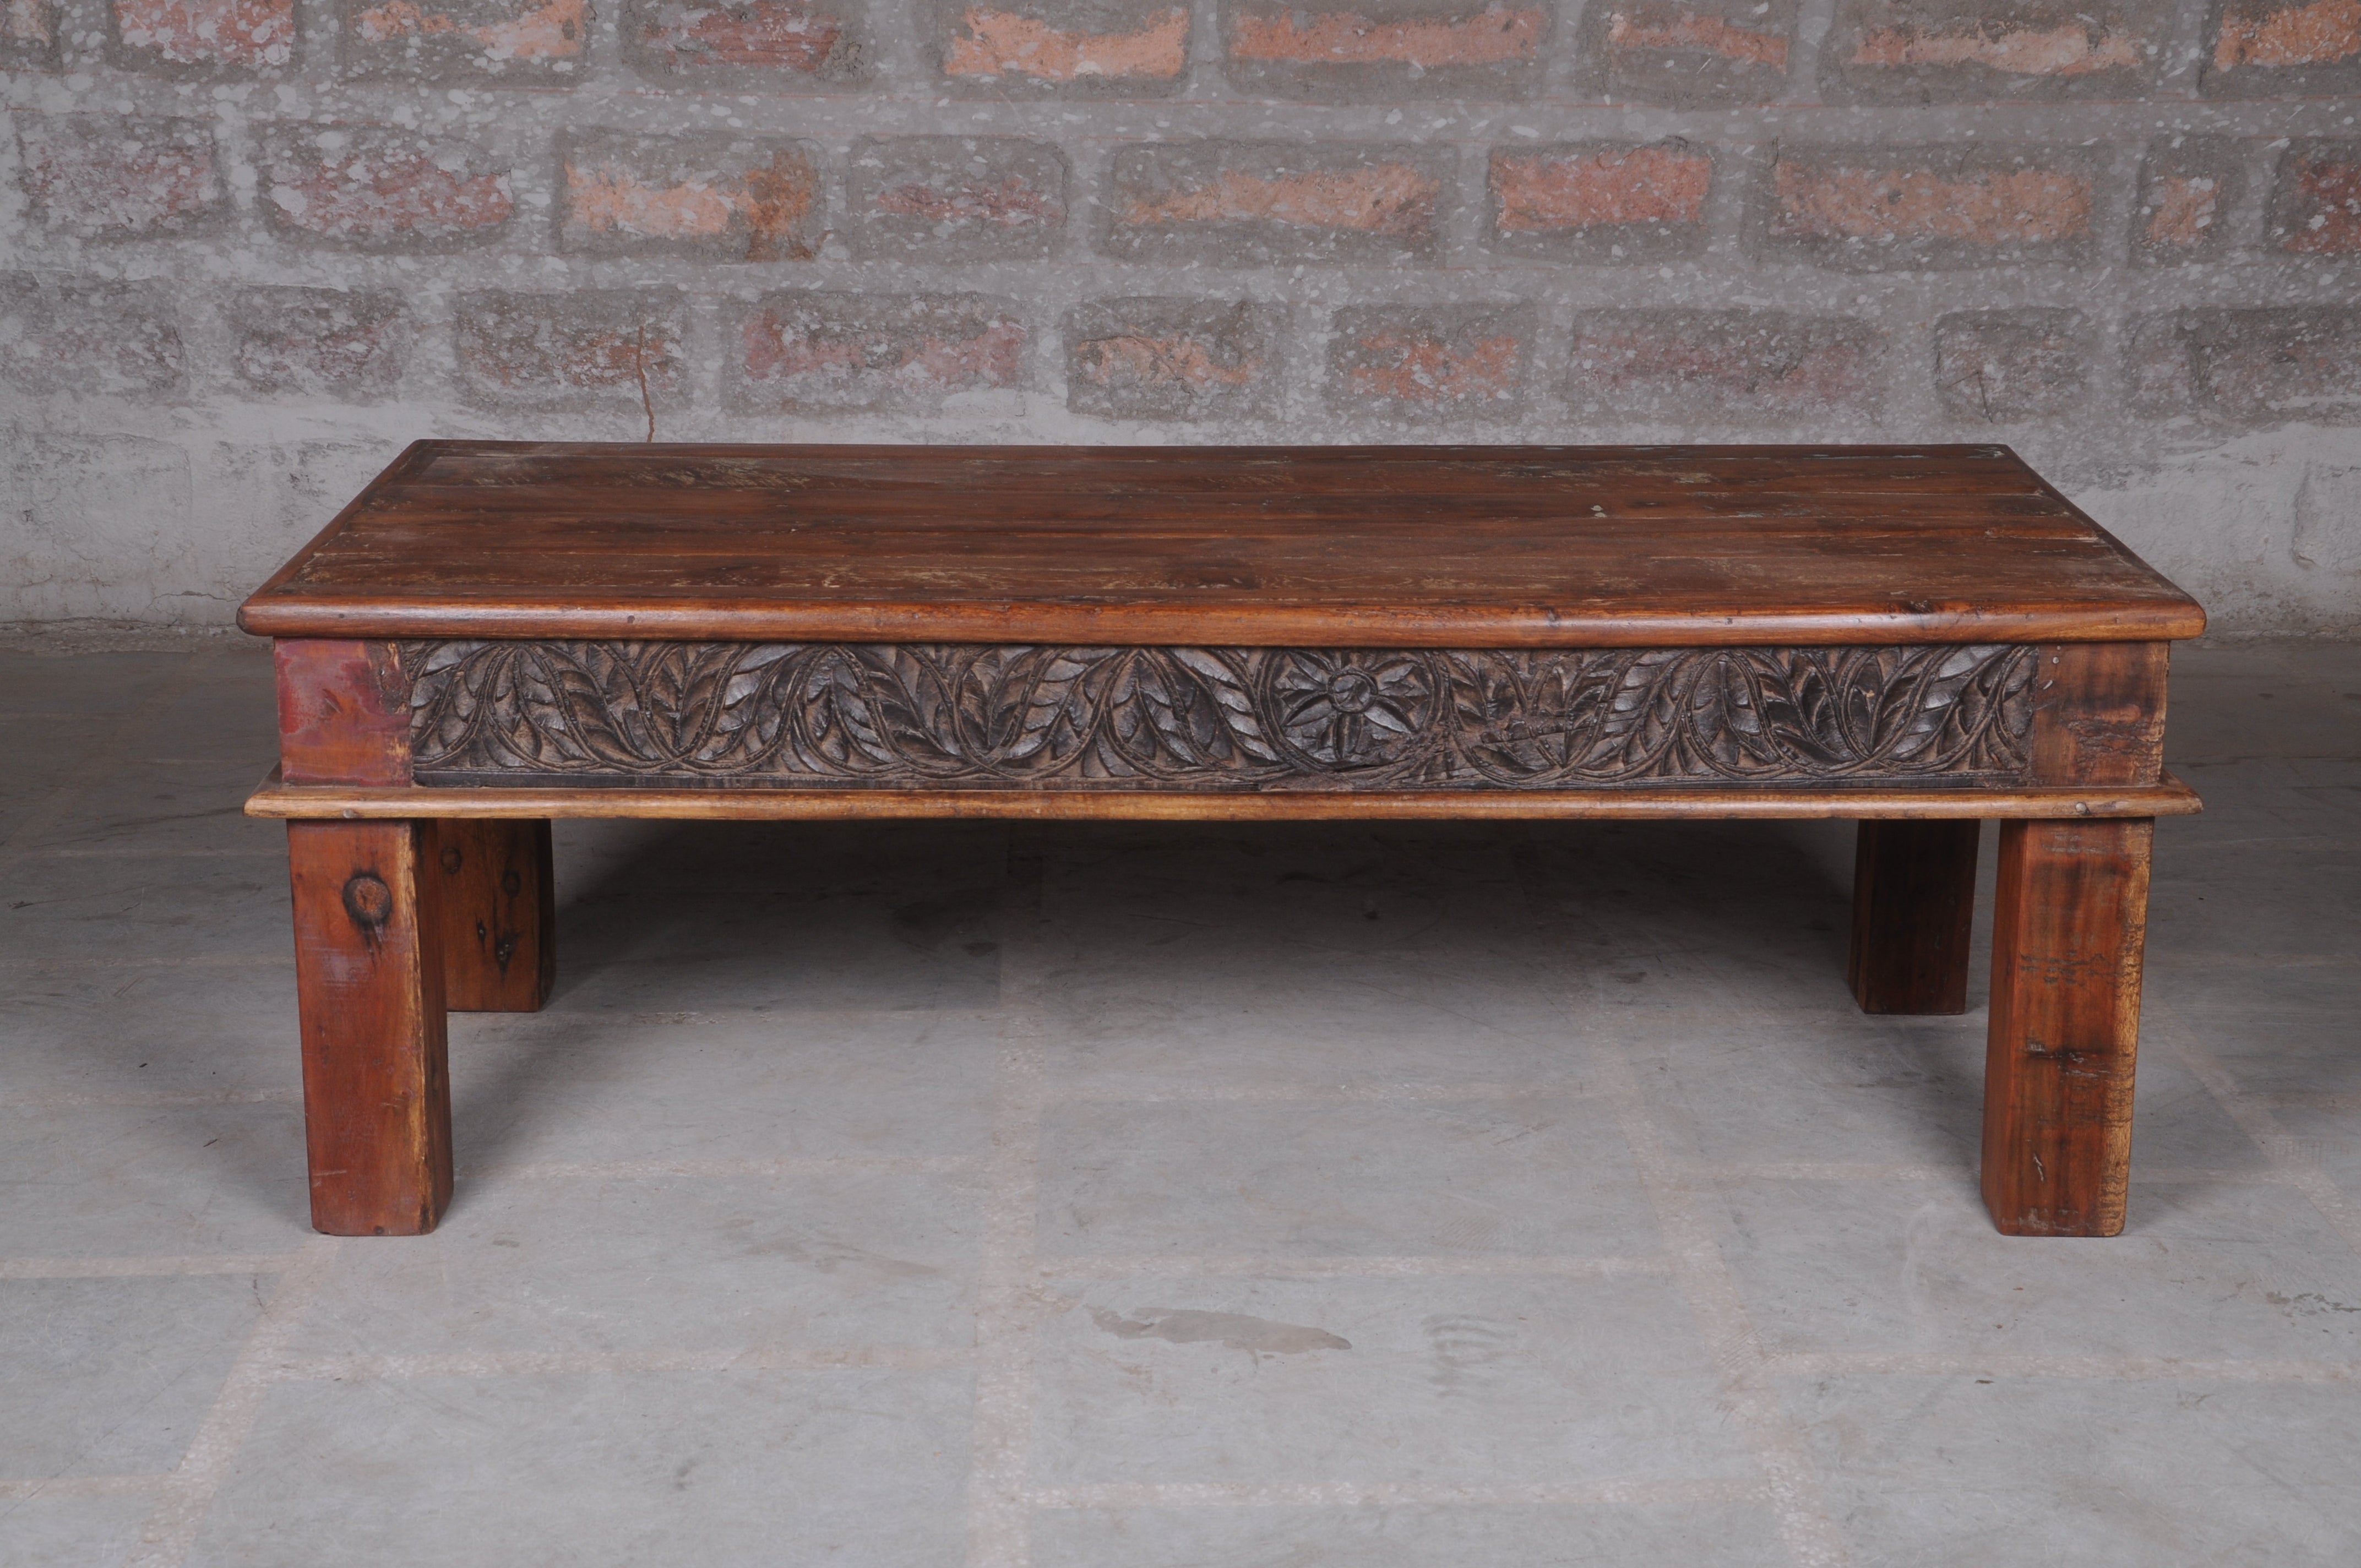 Belgium Themed Dark Polished Handmade Short Legs Wooden Coffee Table Coffee Table